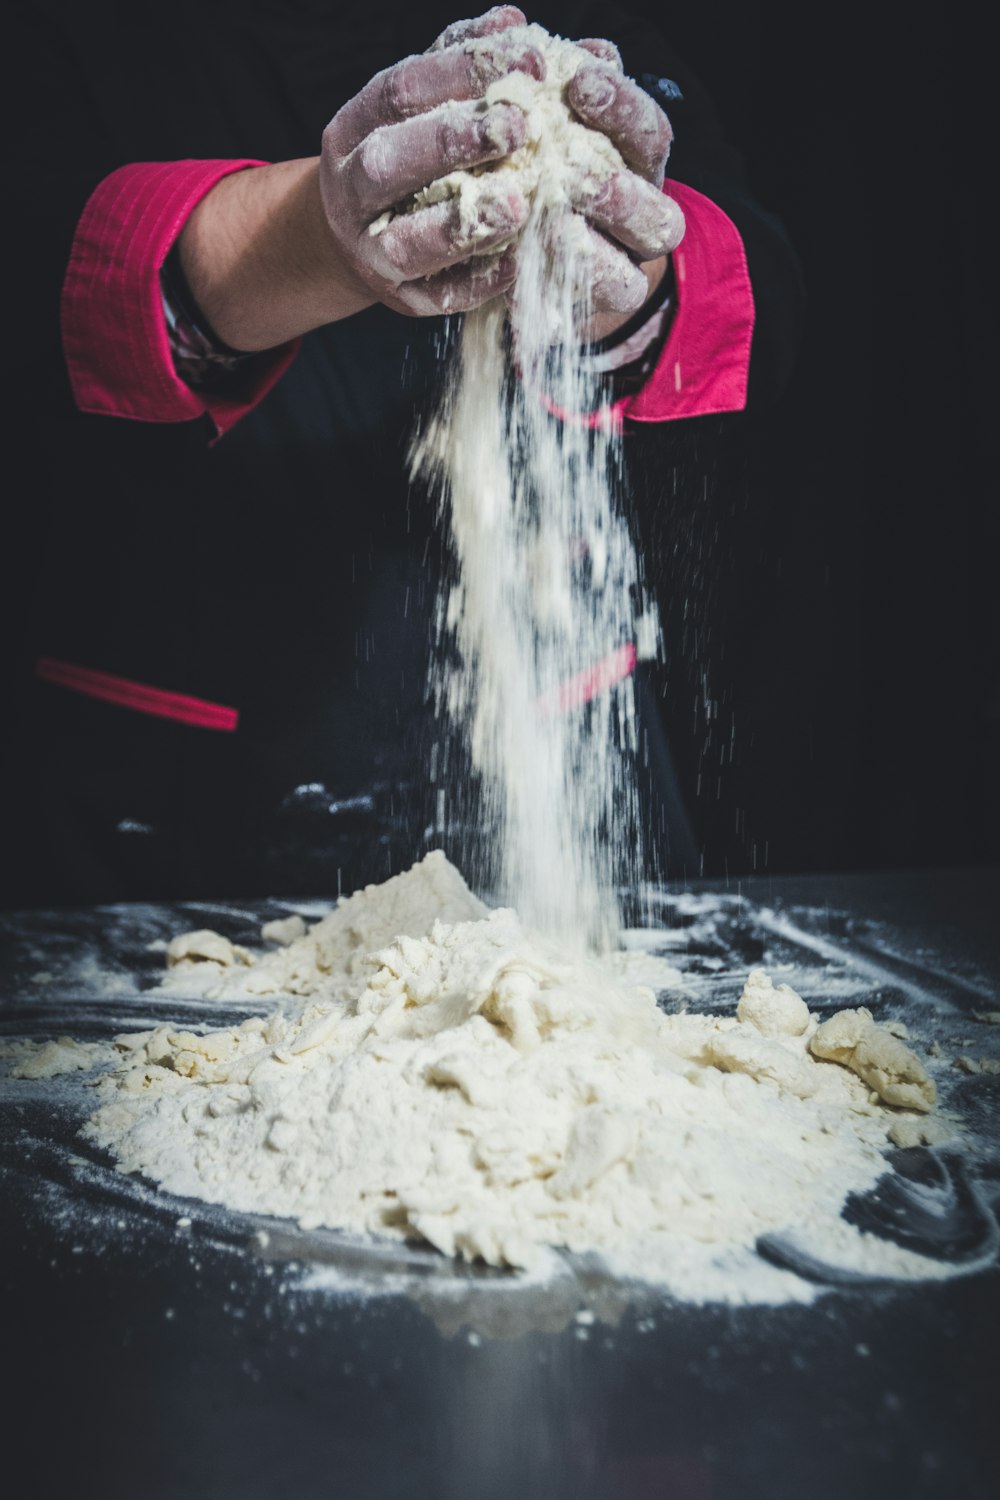 person mixing dough